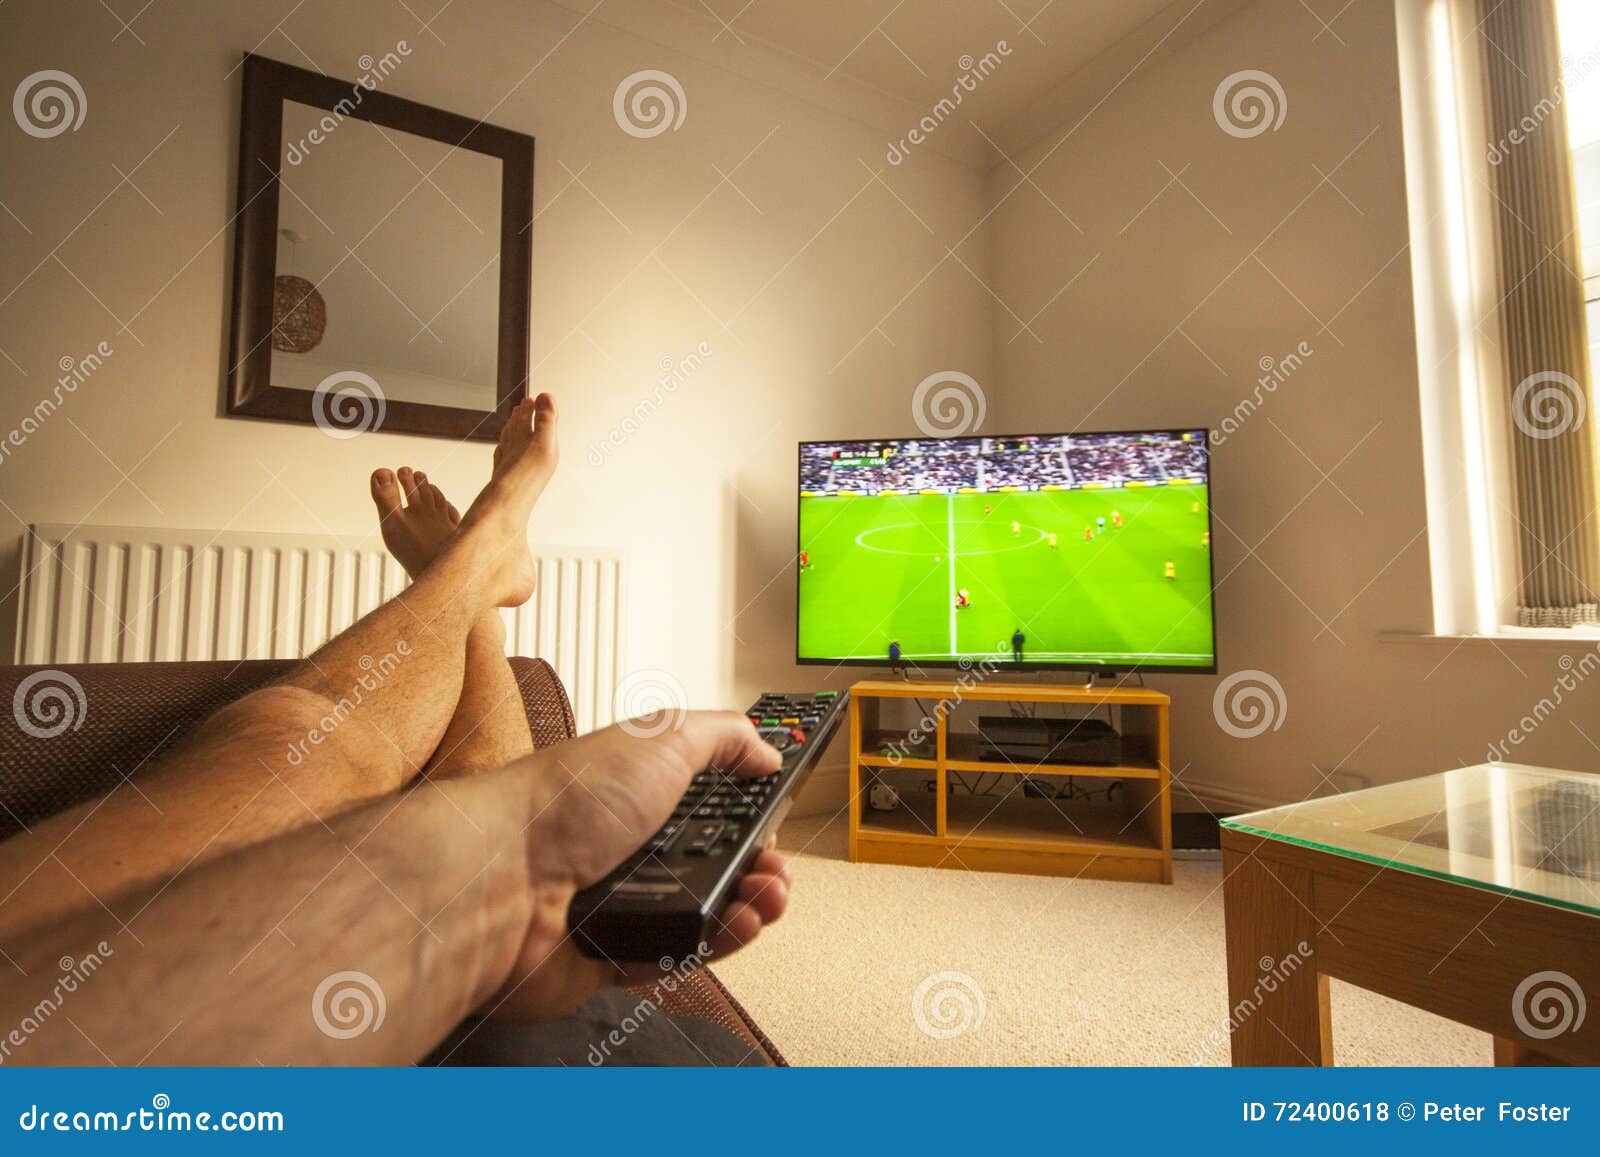 Watching Football on TV stock photo